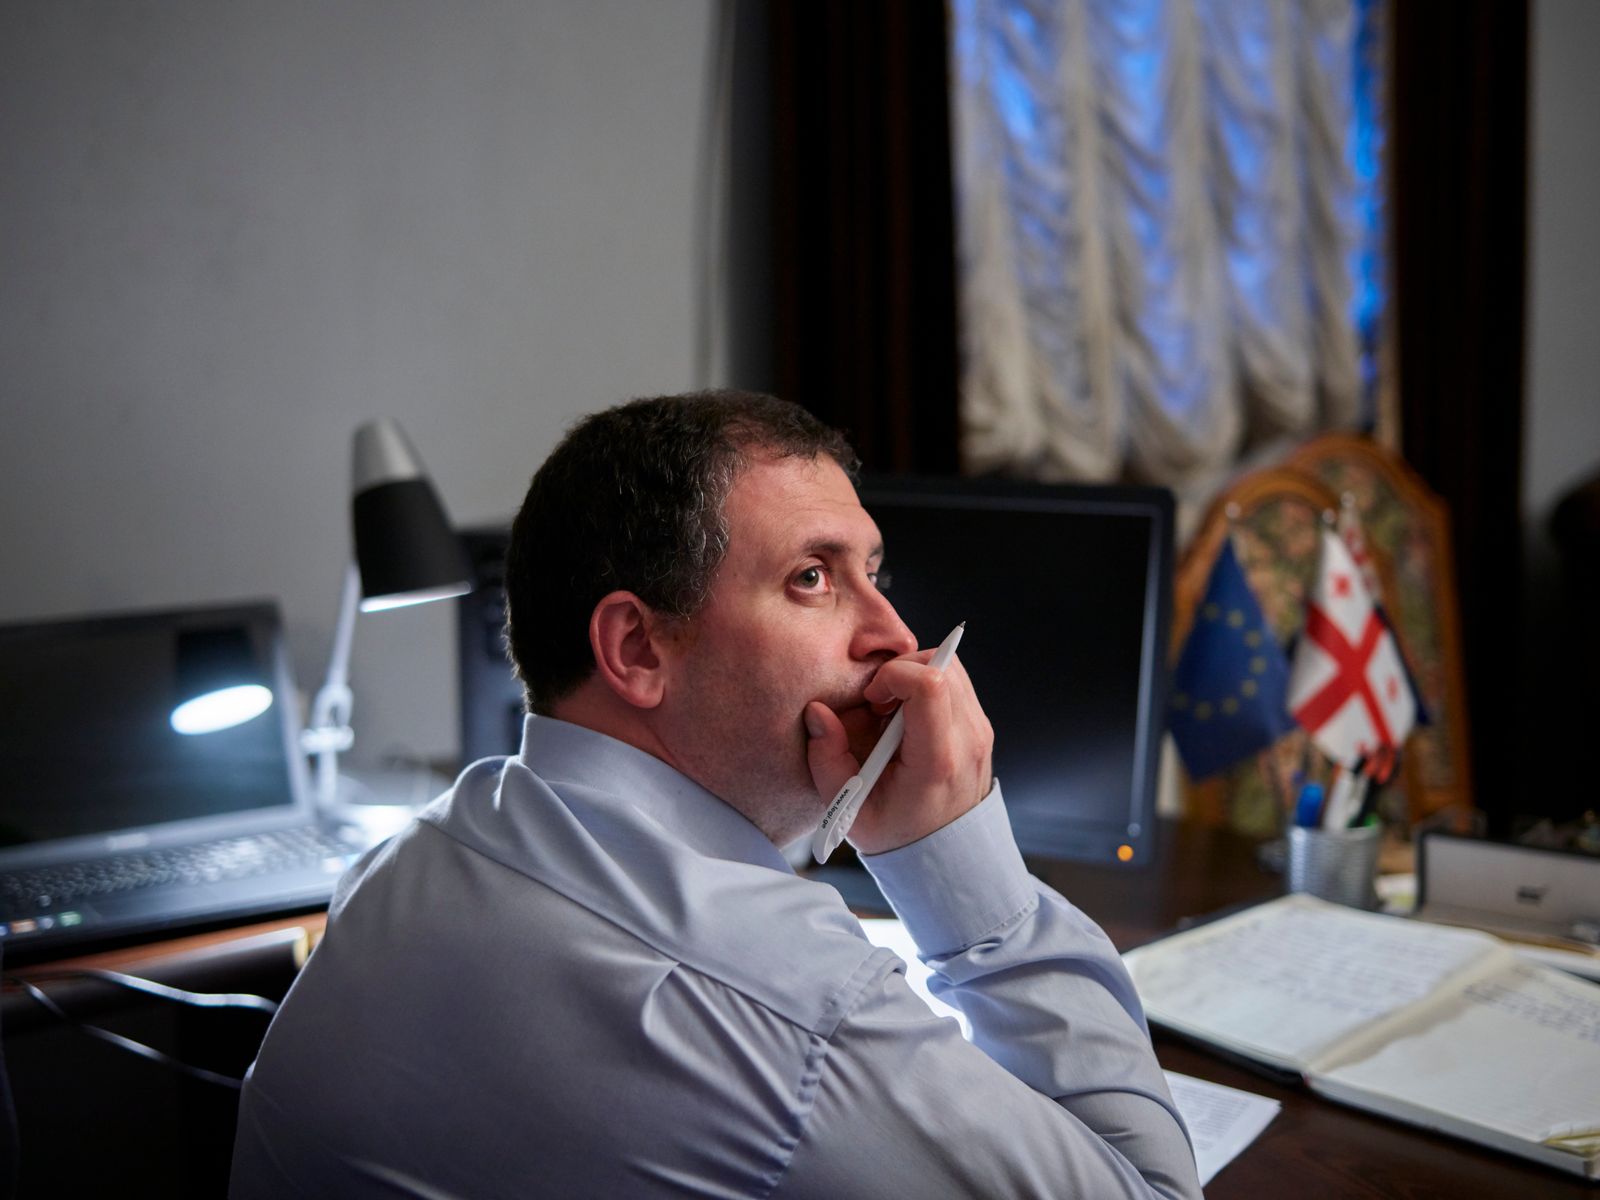 © Jörg Gläscher - Mirian Katamadze, Mayor of Kobuleti, working in his office in Cityhall Kobuleti Gerorgia.